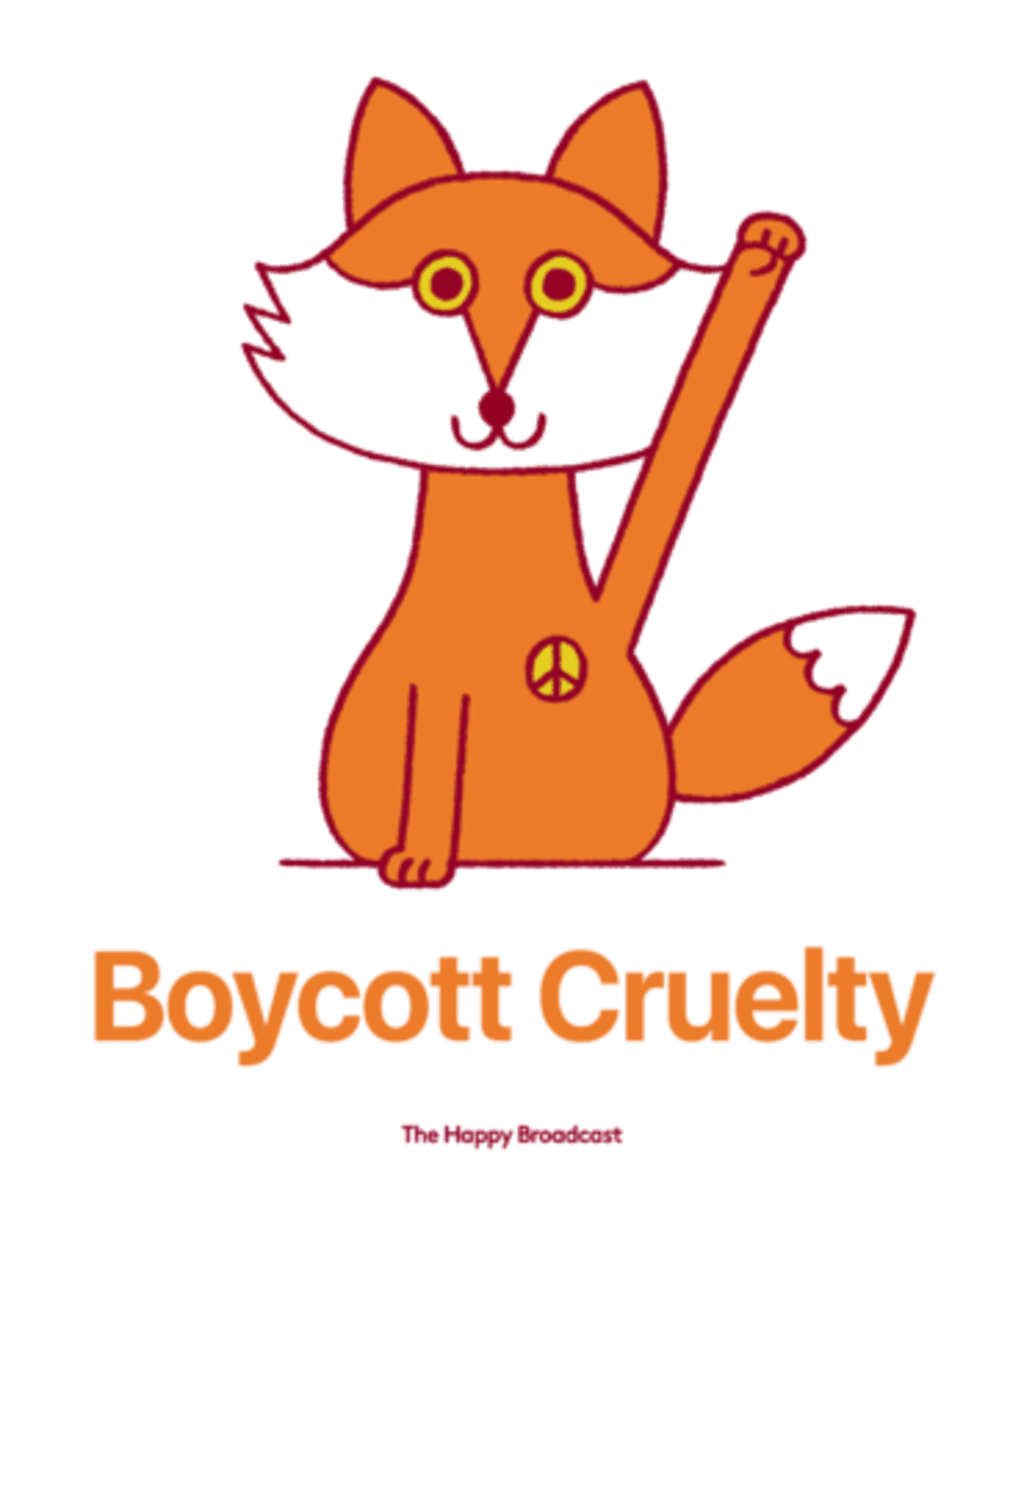 Boycott cruelty